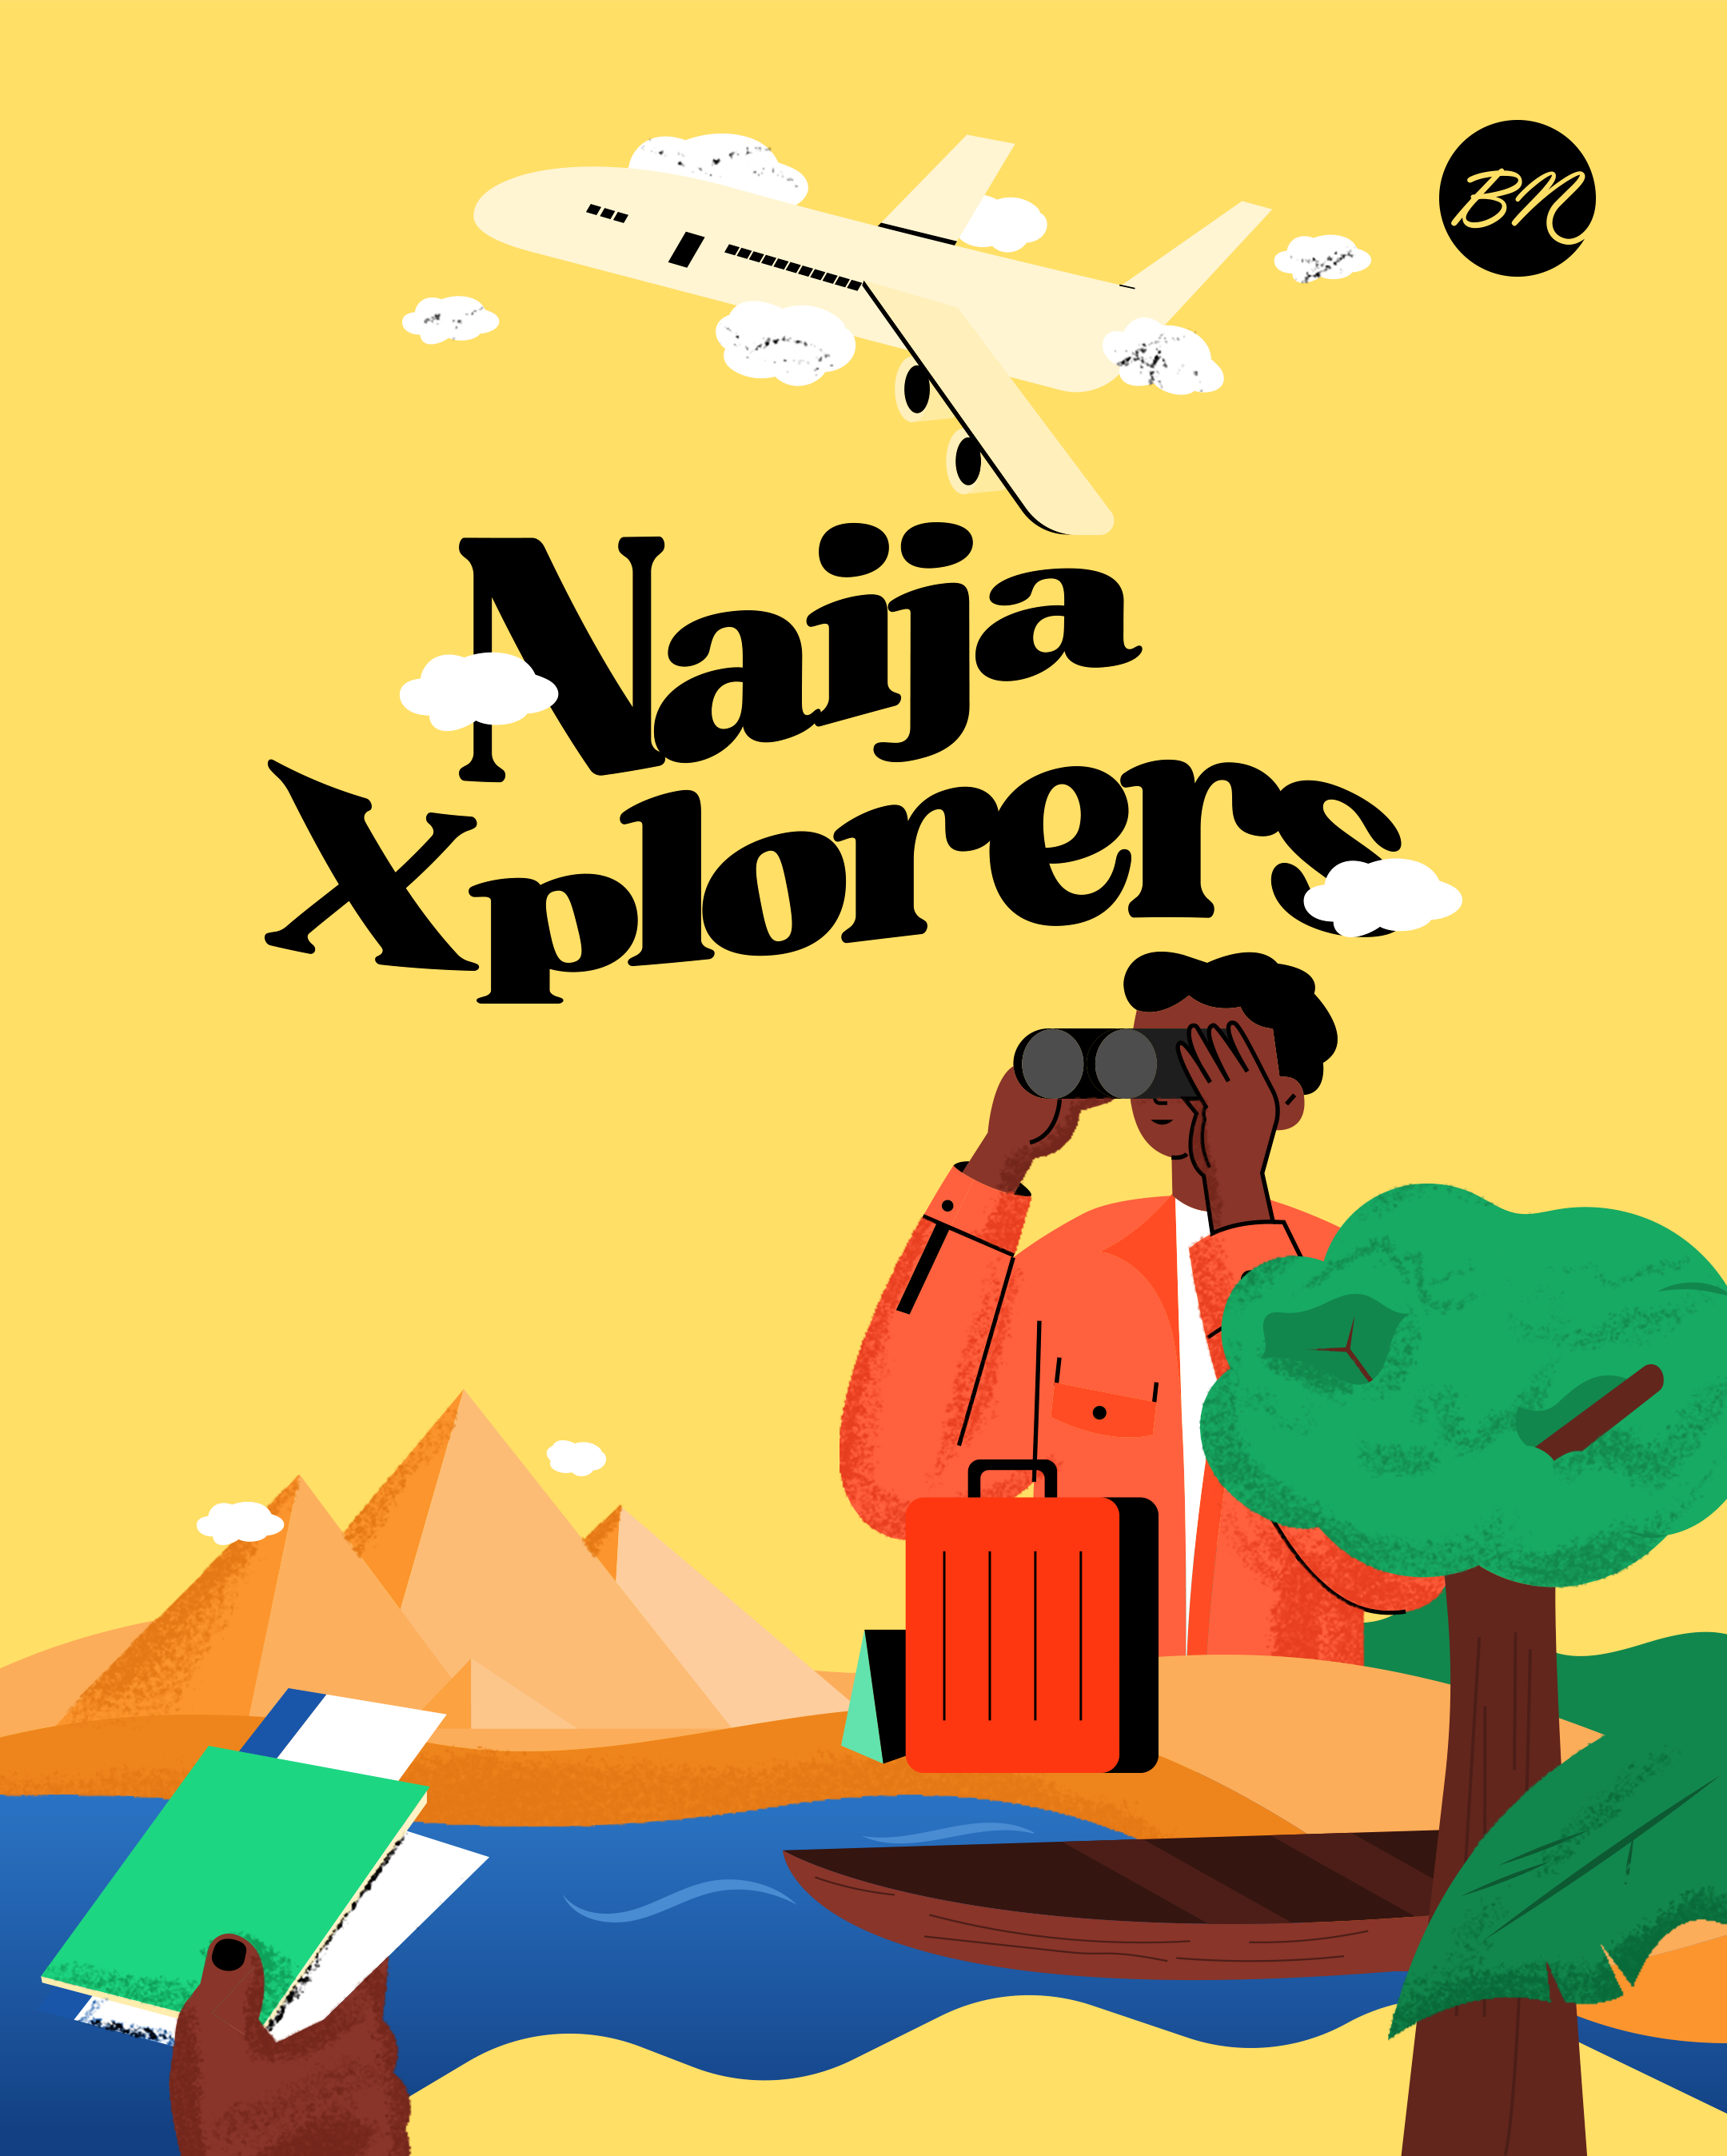 Introducing Naija Xplorers… Your Bi-Weekly Dose of Budget-Friendly Travel Inspiration